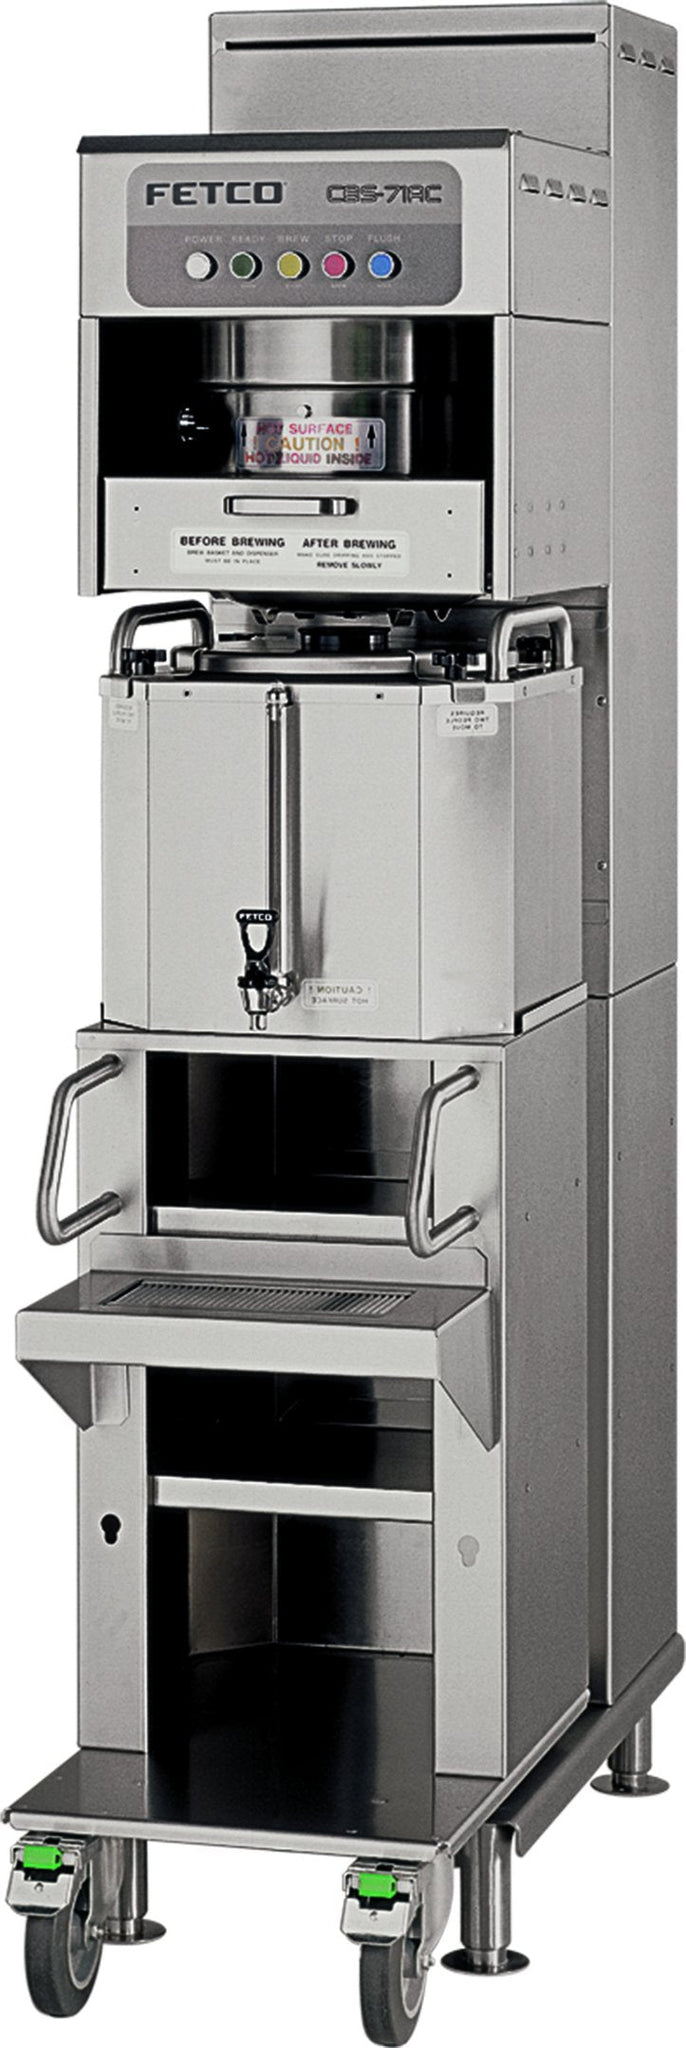 Fetco - High Volume Single Station Coffee Brewing System 3 x 10 kW (120/208-240V) - CBS-71AC